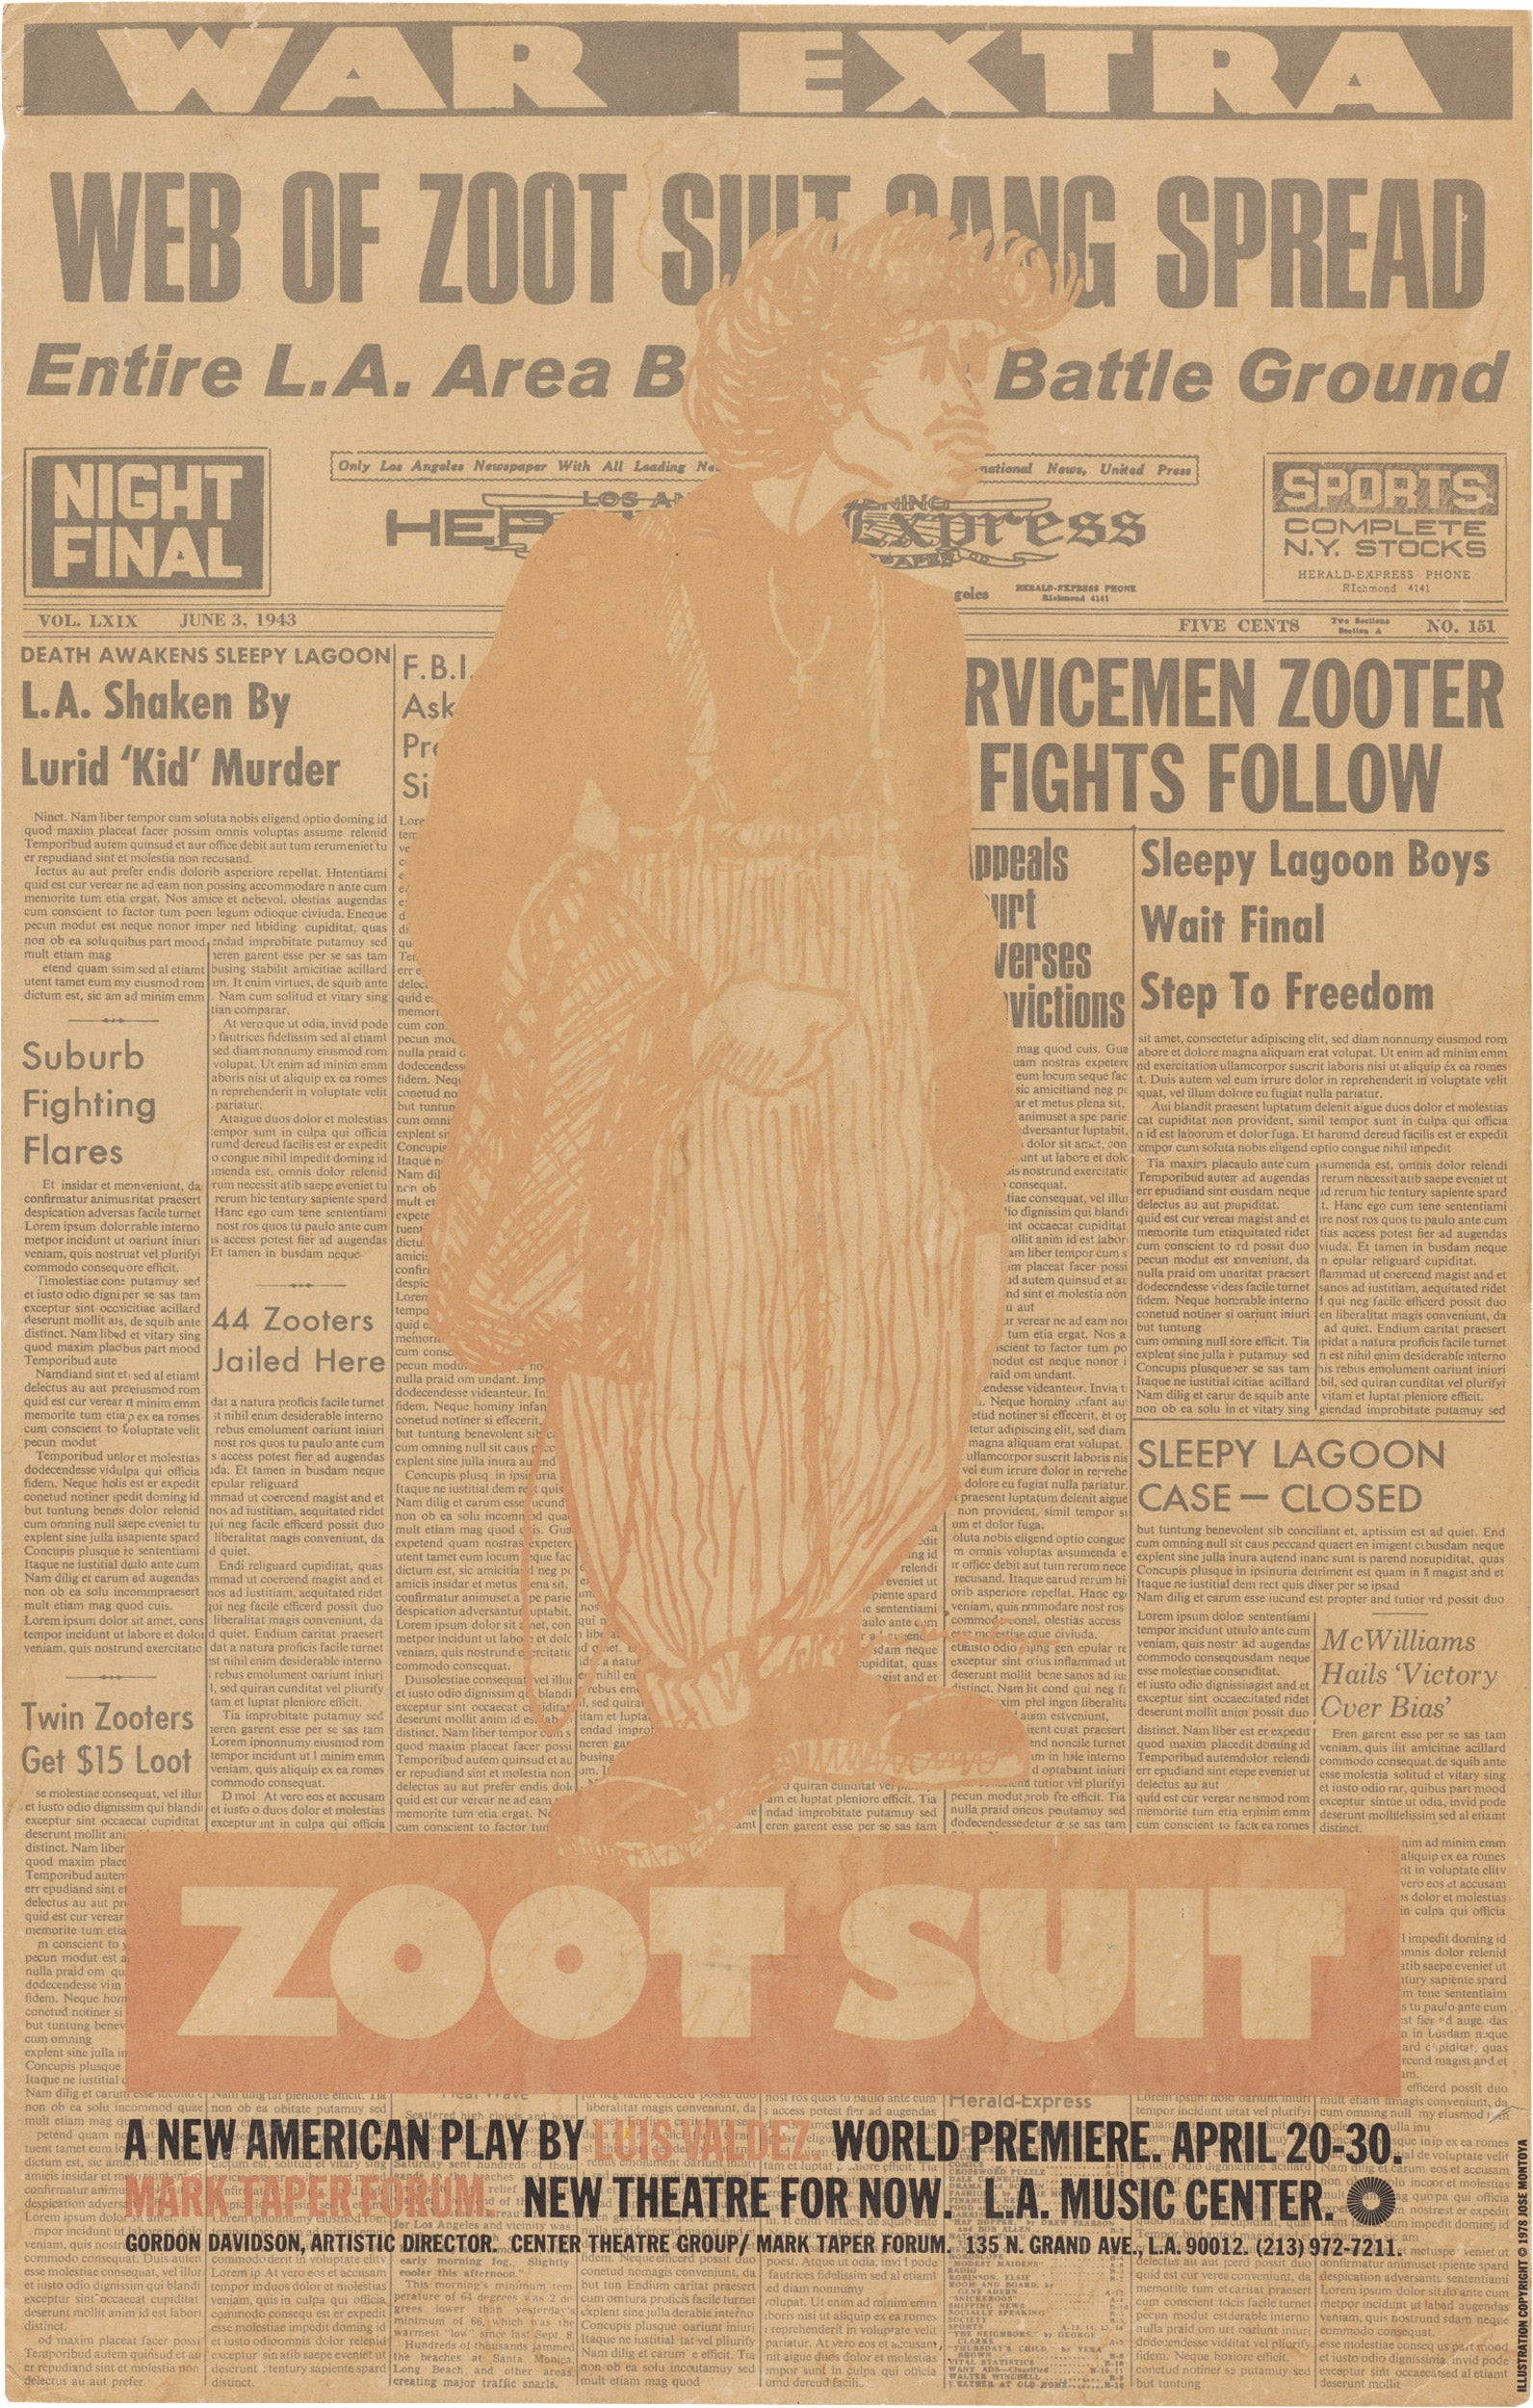 Luis Valdez’s pioneering Chicano play "Zoot Suit" (1978) poster